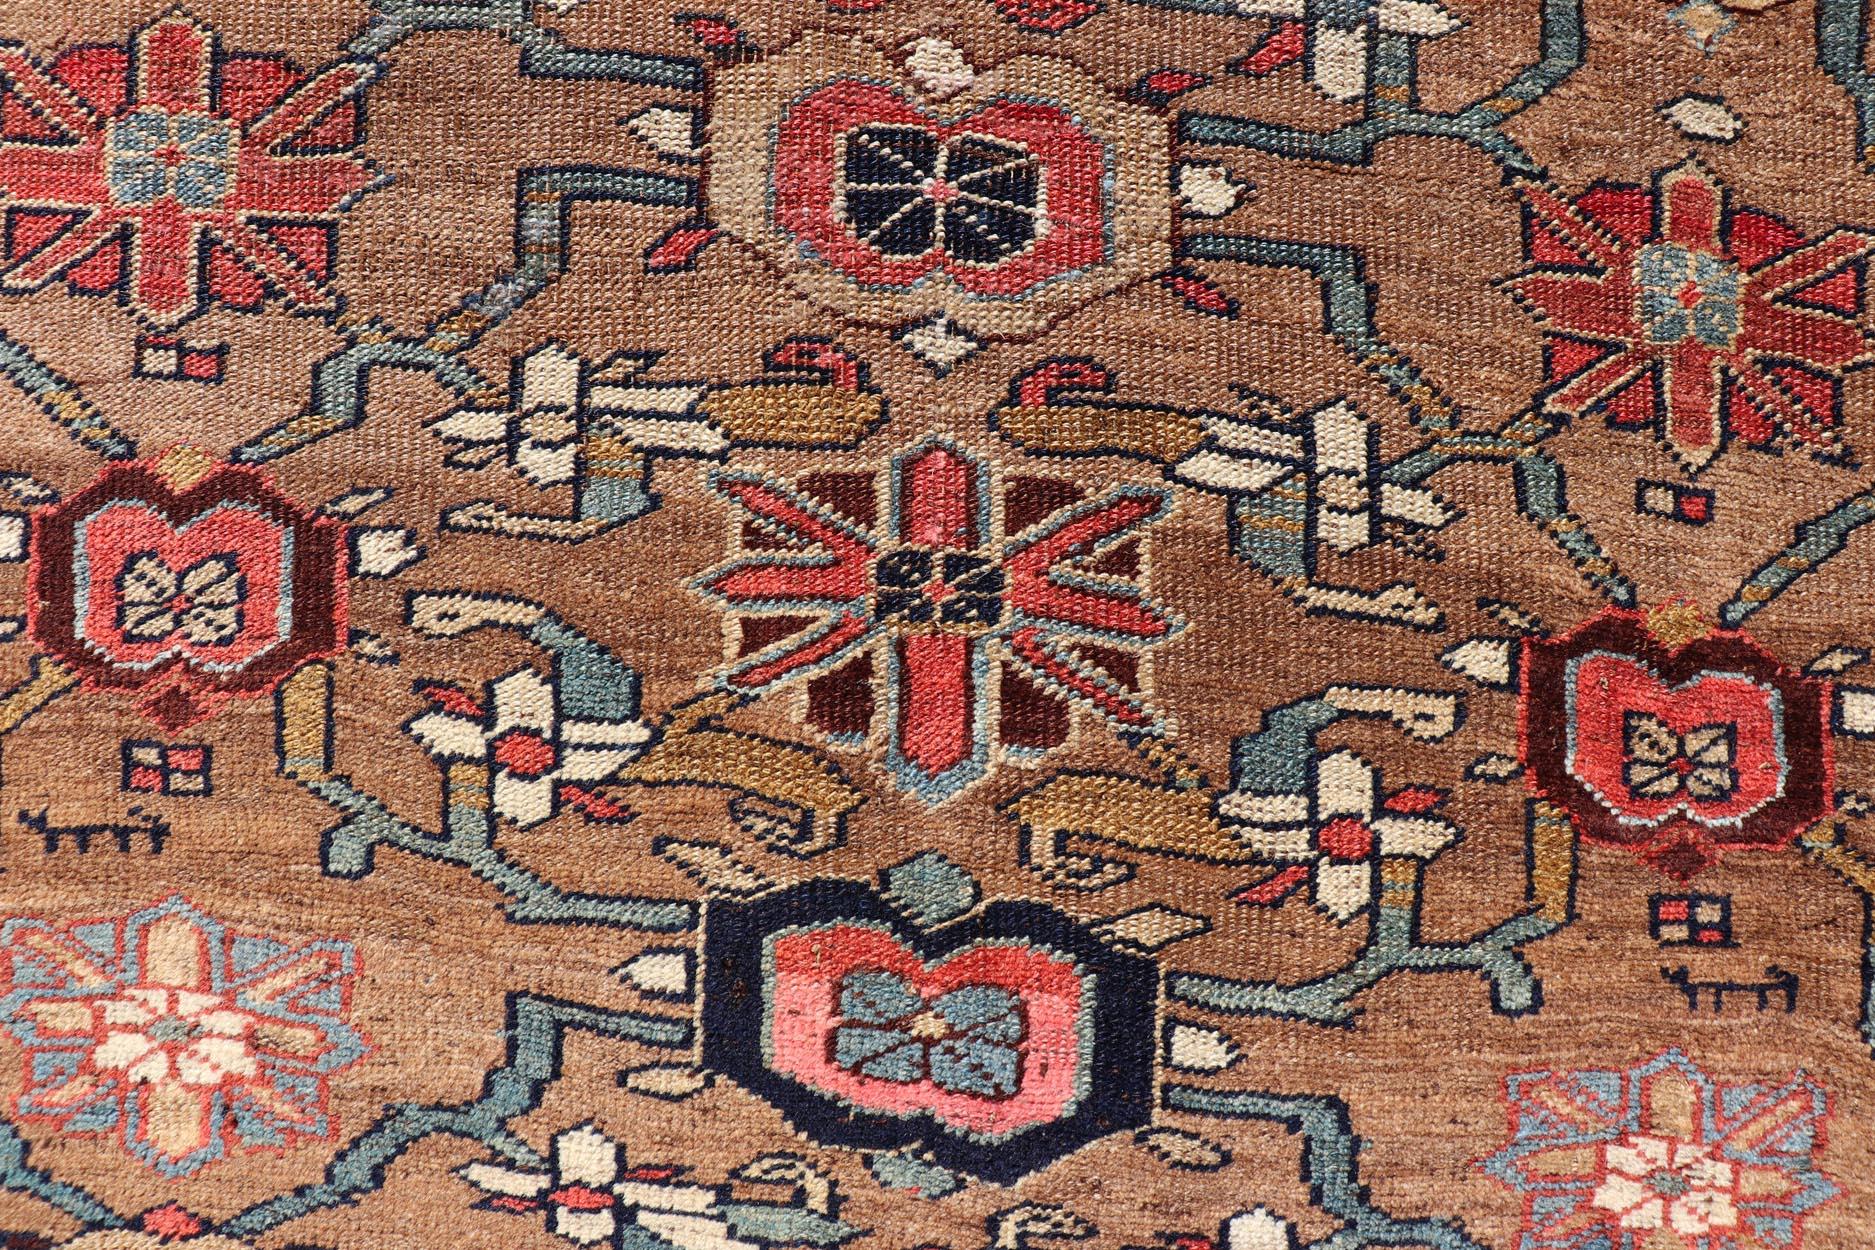 Square Antique Persian Bidjar Rug with Floral Motifs in Brown, Tan, & Green. EMB-22118-15010, country of origin / type: Iran / Bidjar, circa 1900
Measures: 4'6 x 4'11.
This antique Persian Bidjar carpet features multi colors and a a large florals,